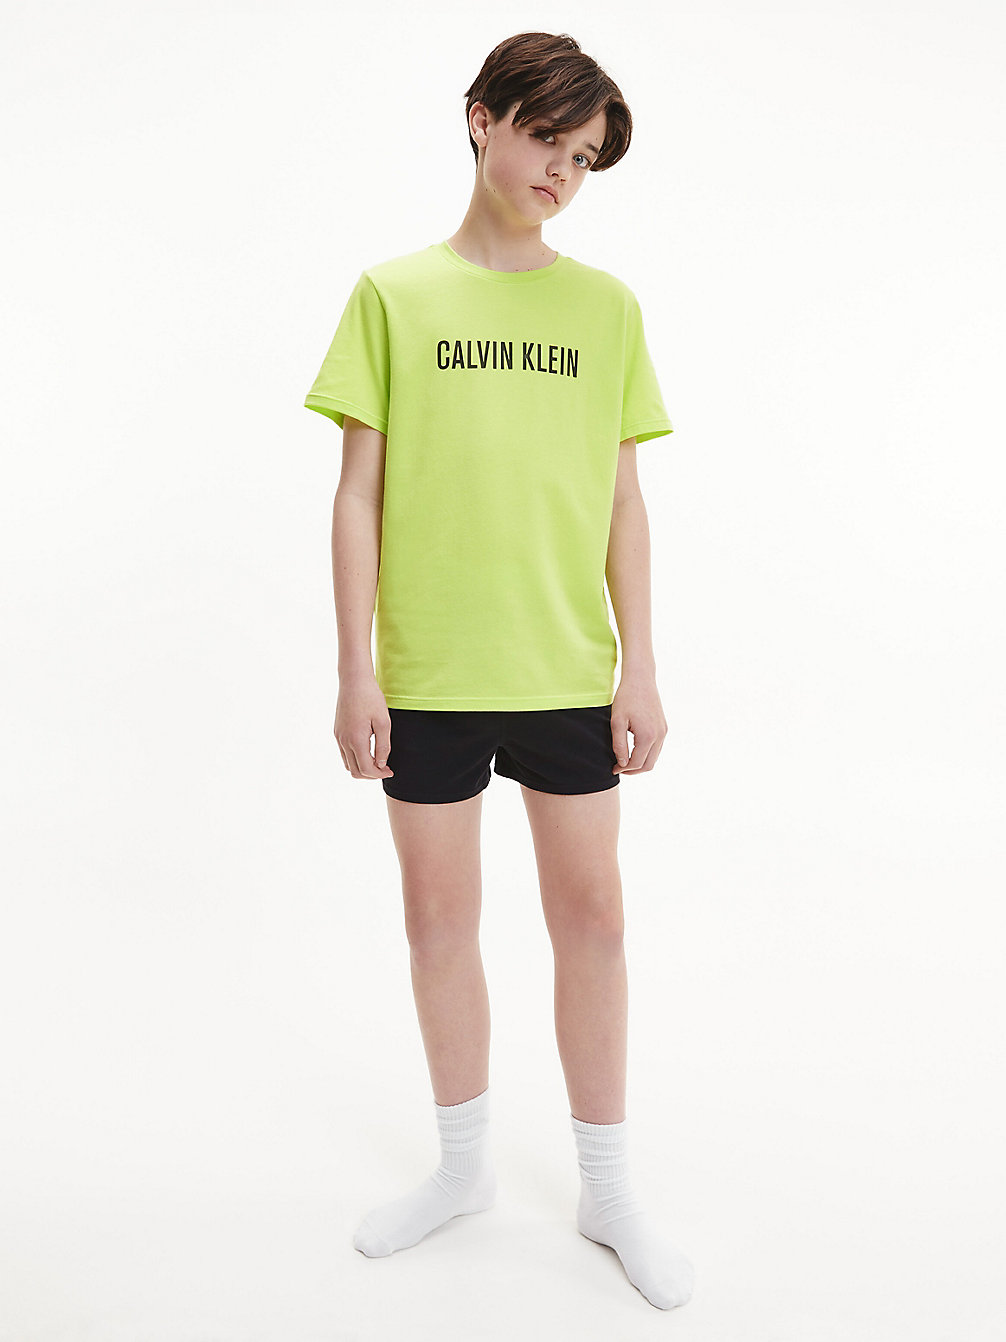 SOURLIME/W/PVHBLACK > Pyjama Met Short - Intense Power > undefined boys - Calvin Klein